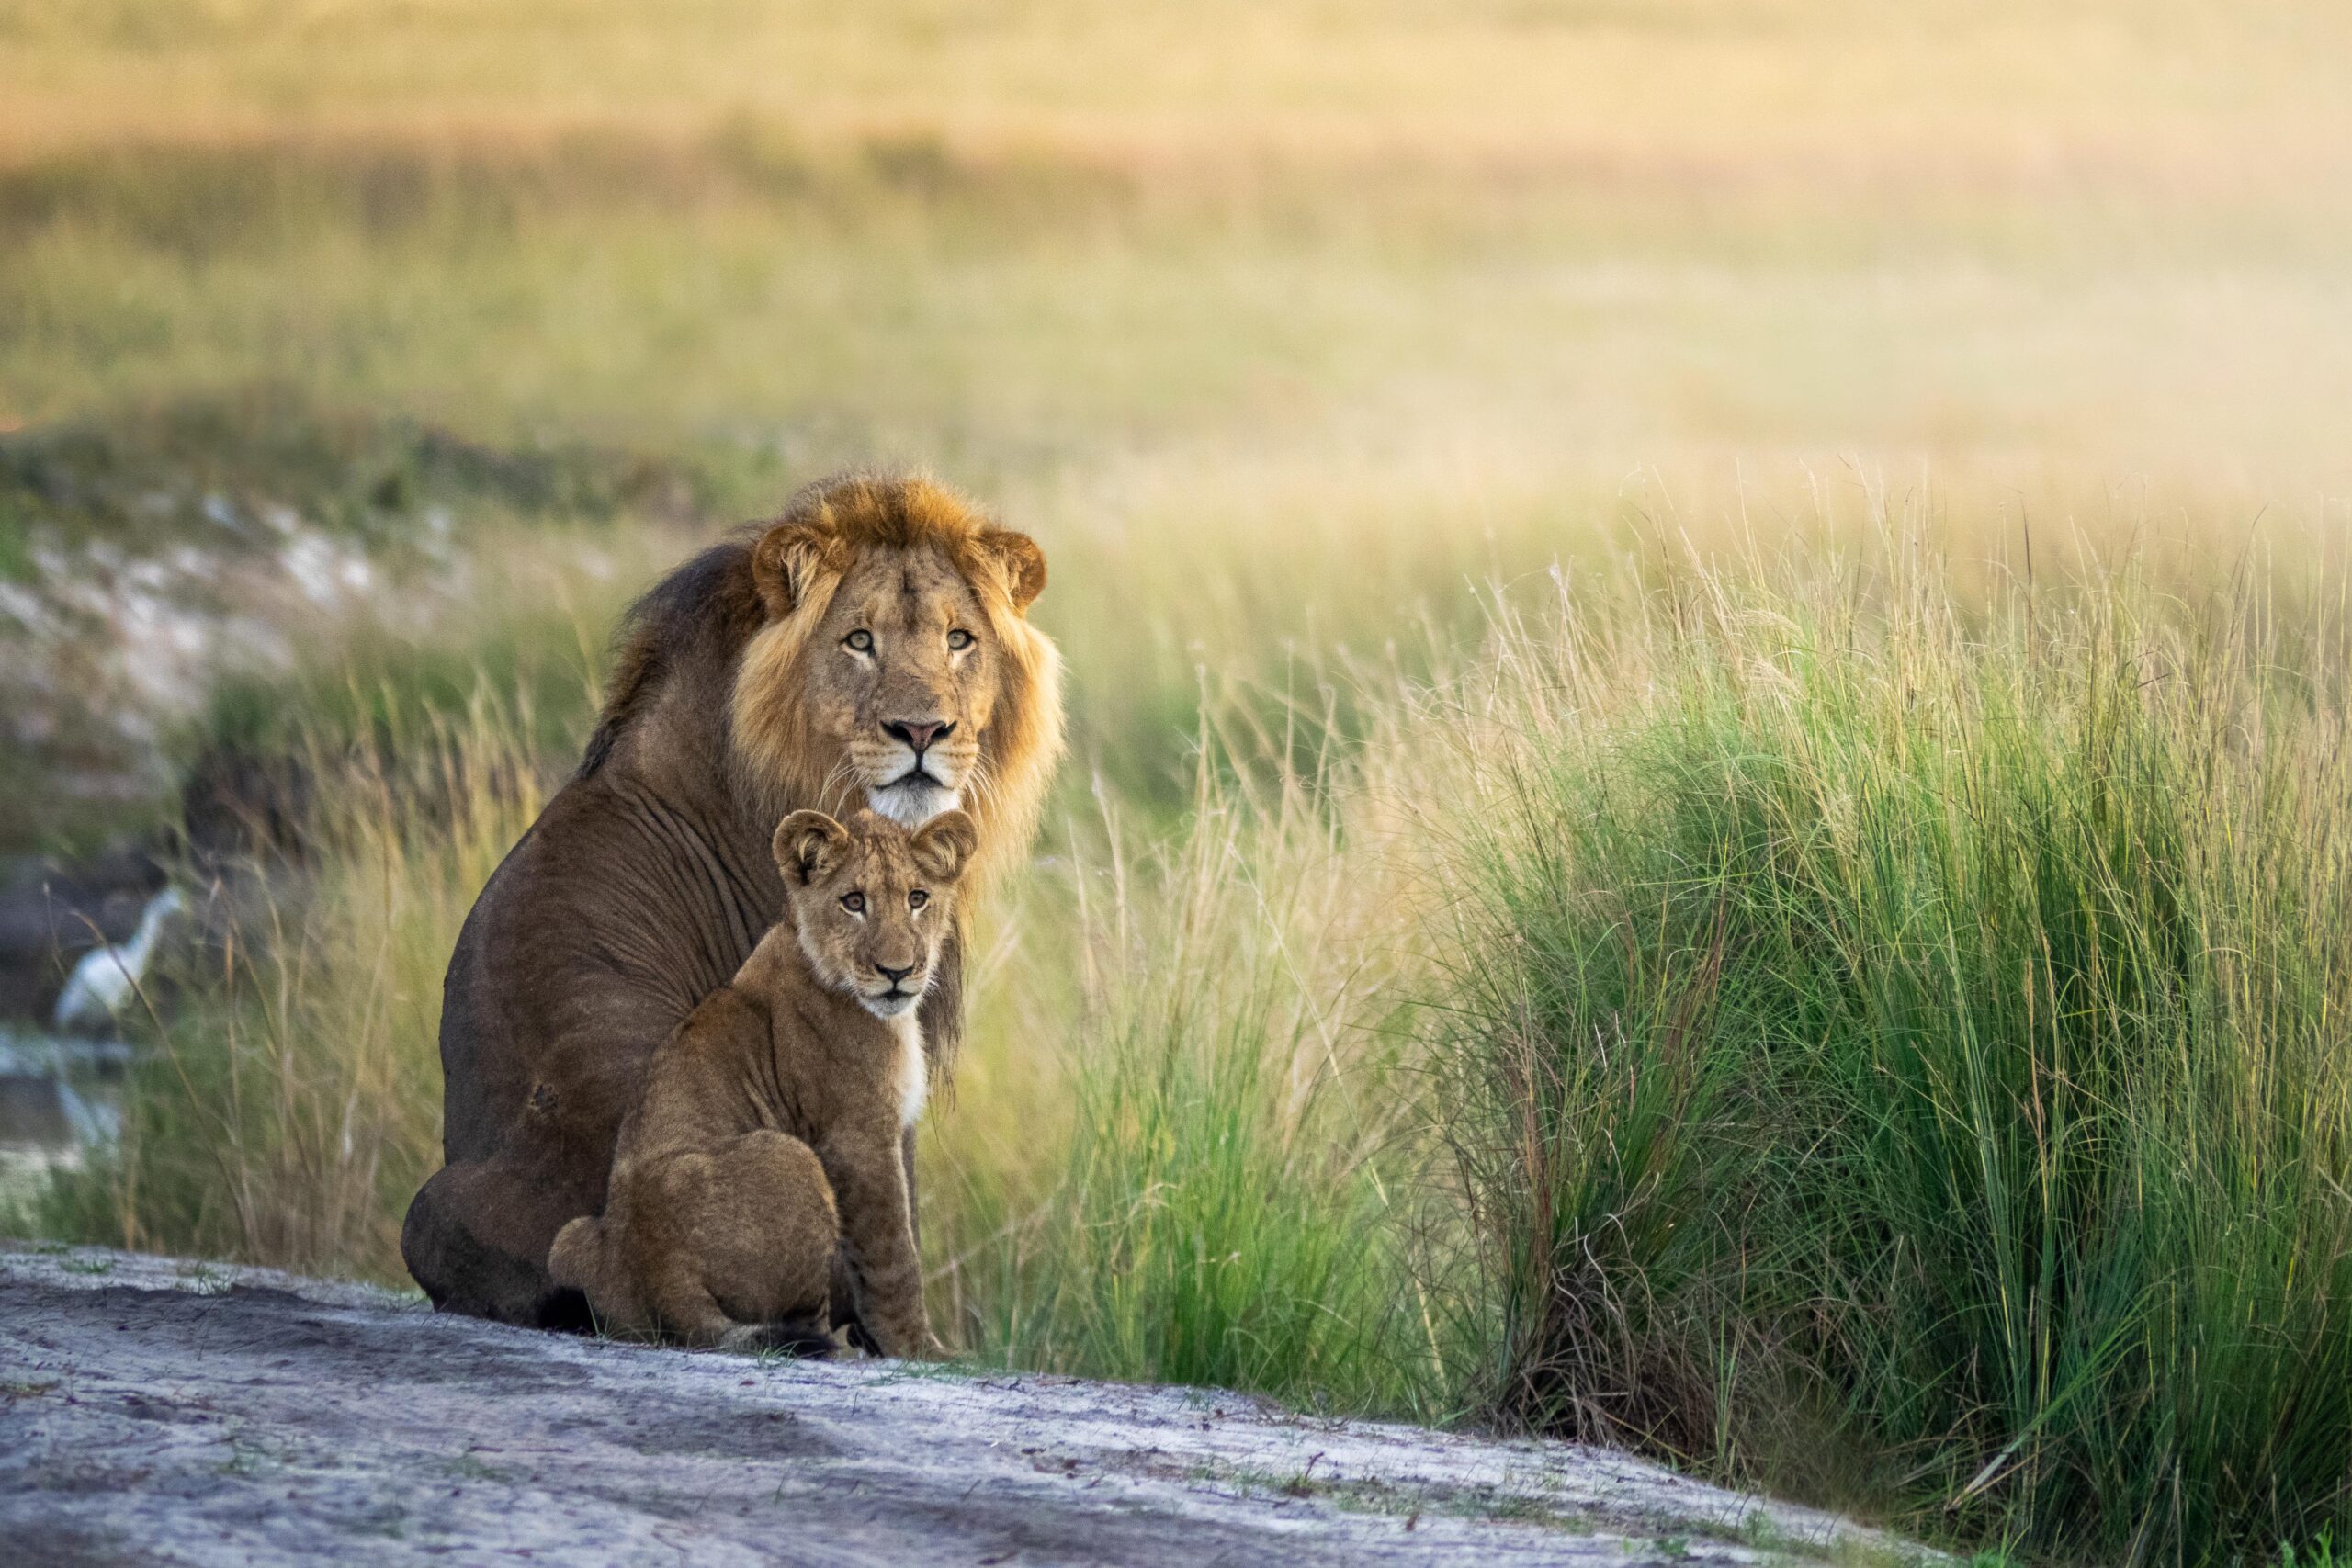 Lions at Liuwa Plains National Park